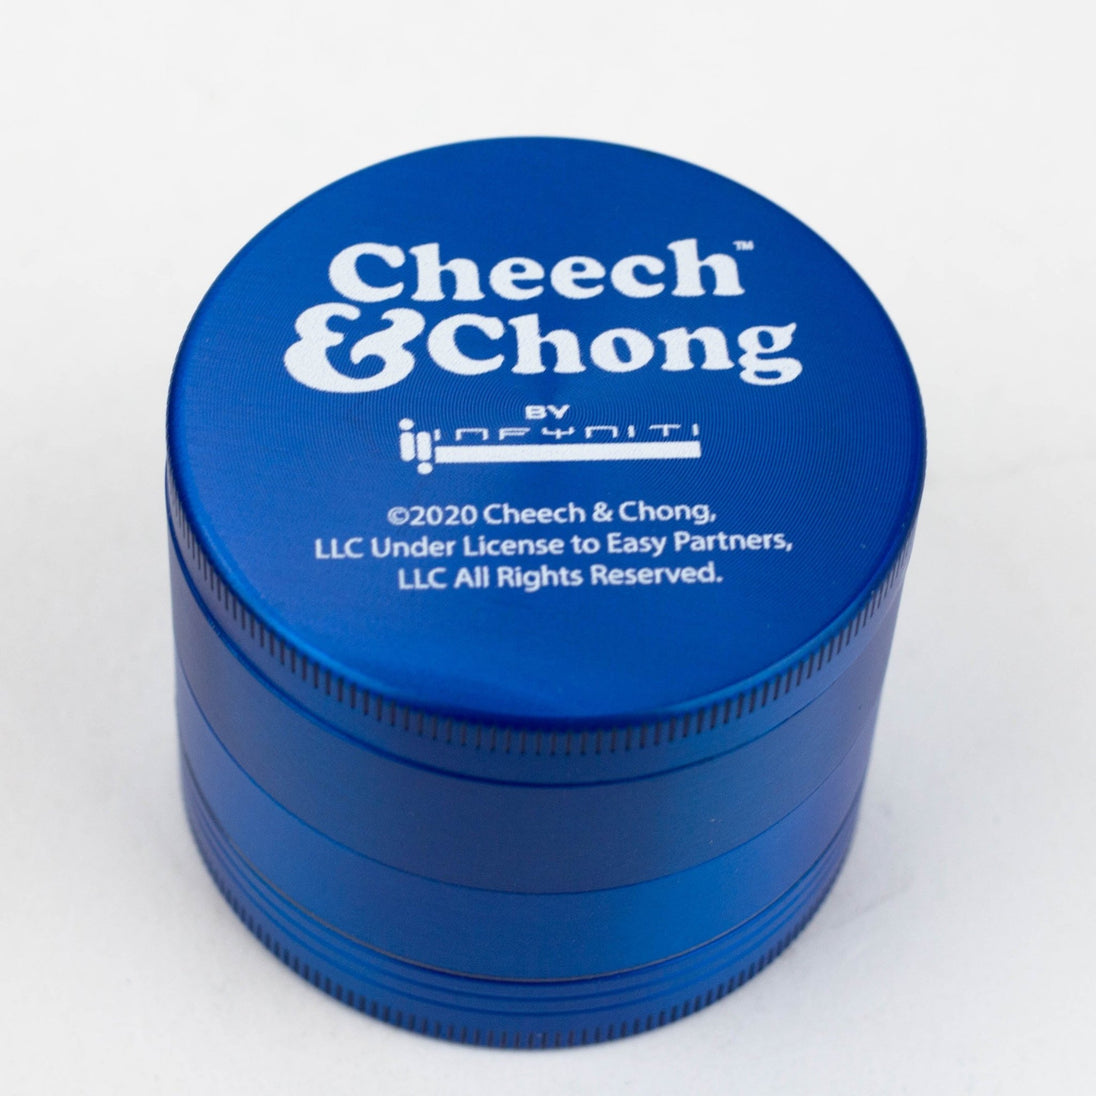 Cheech & Chong - 4 Part Metal Grinder by Infyniti - Glasss Station